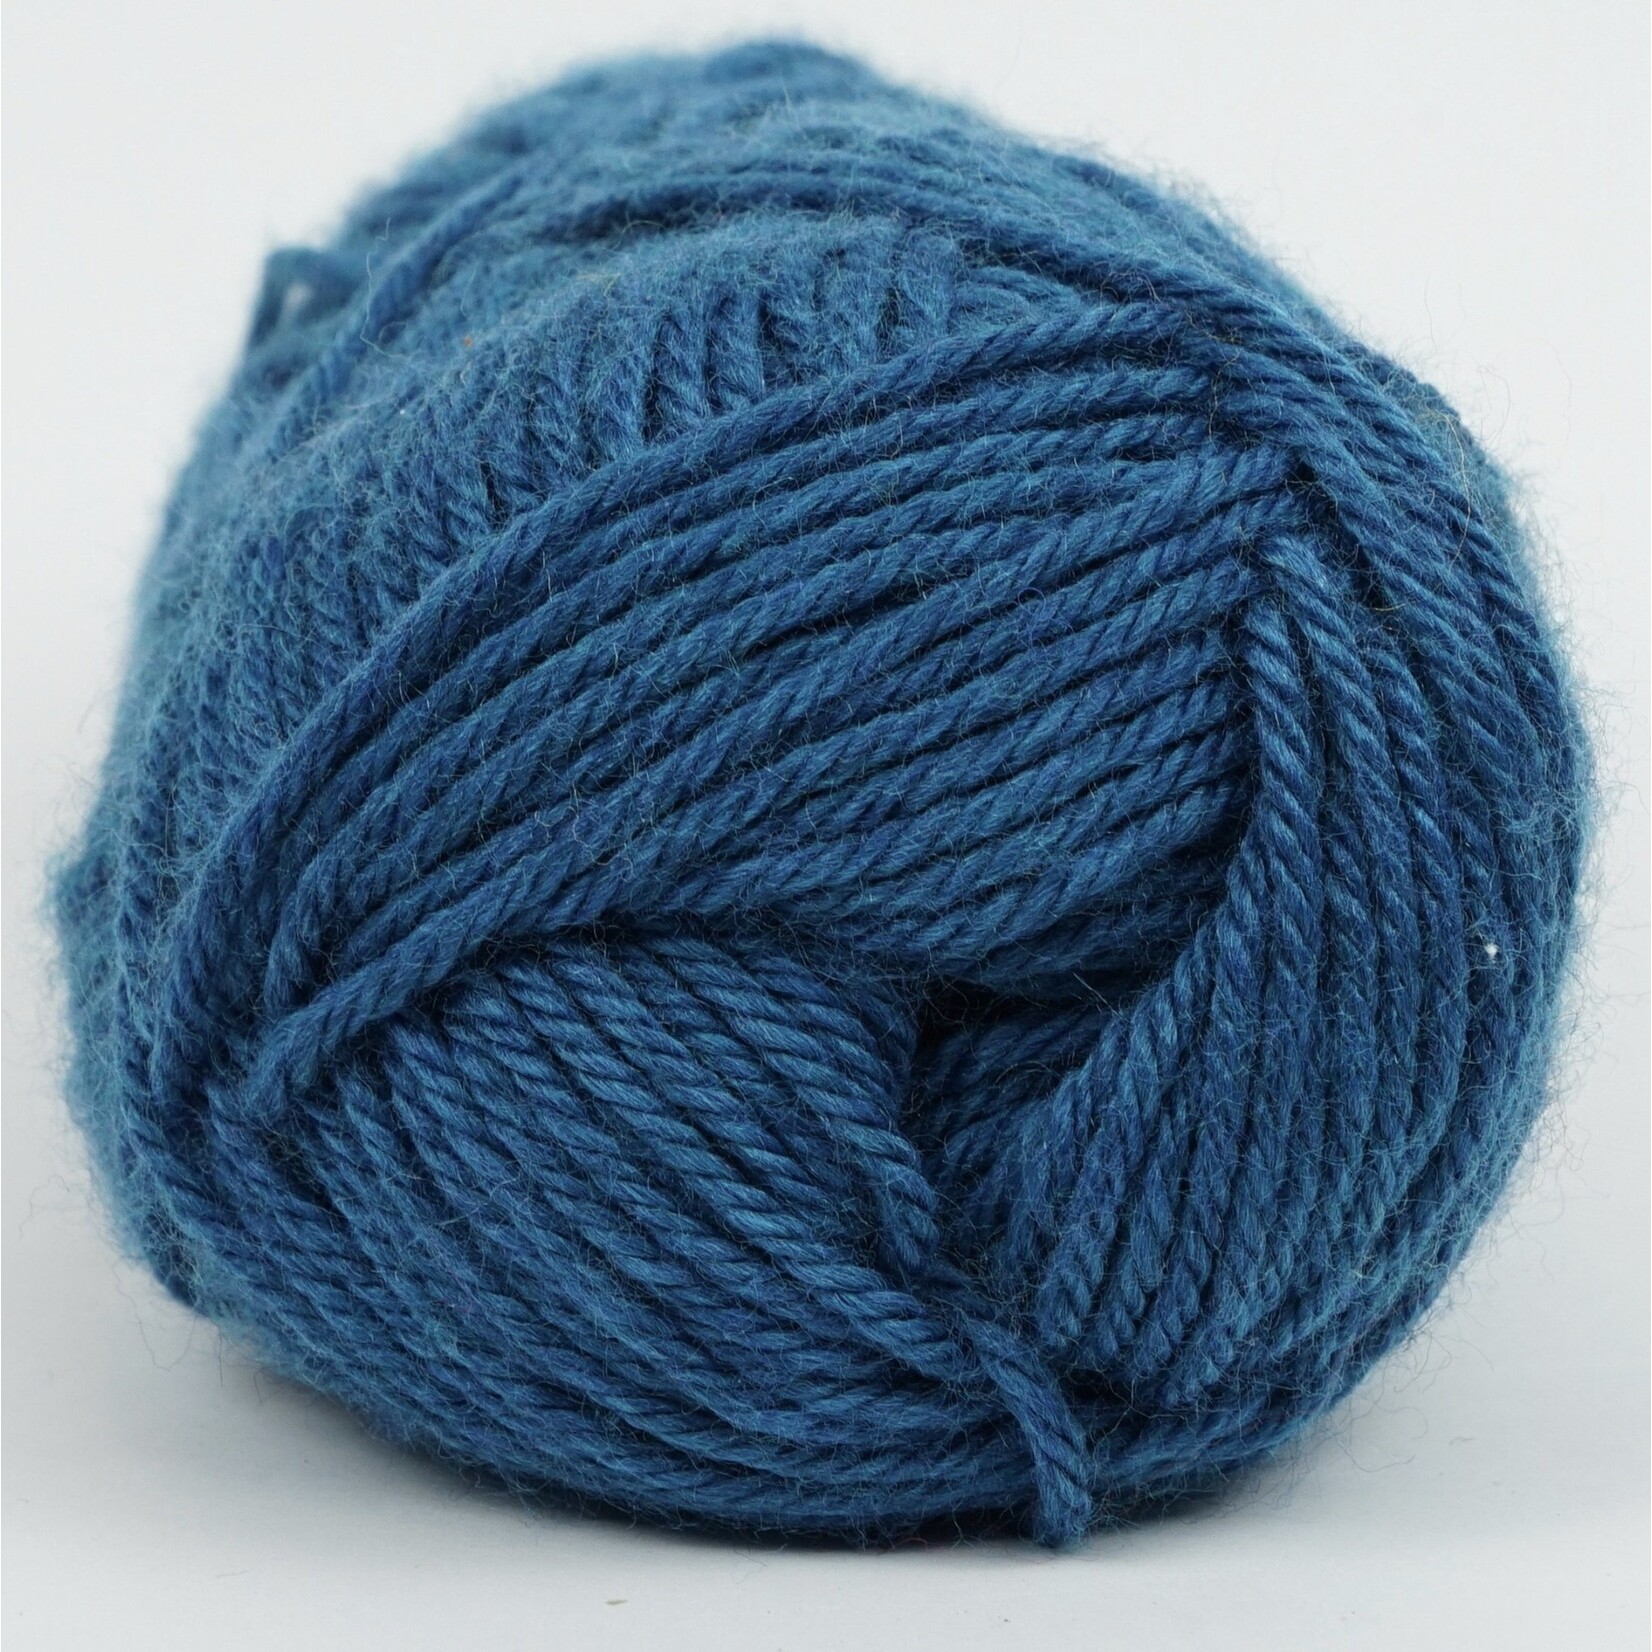 Kraemer Yarns Yarn - Perfection Worsted Cobalt